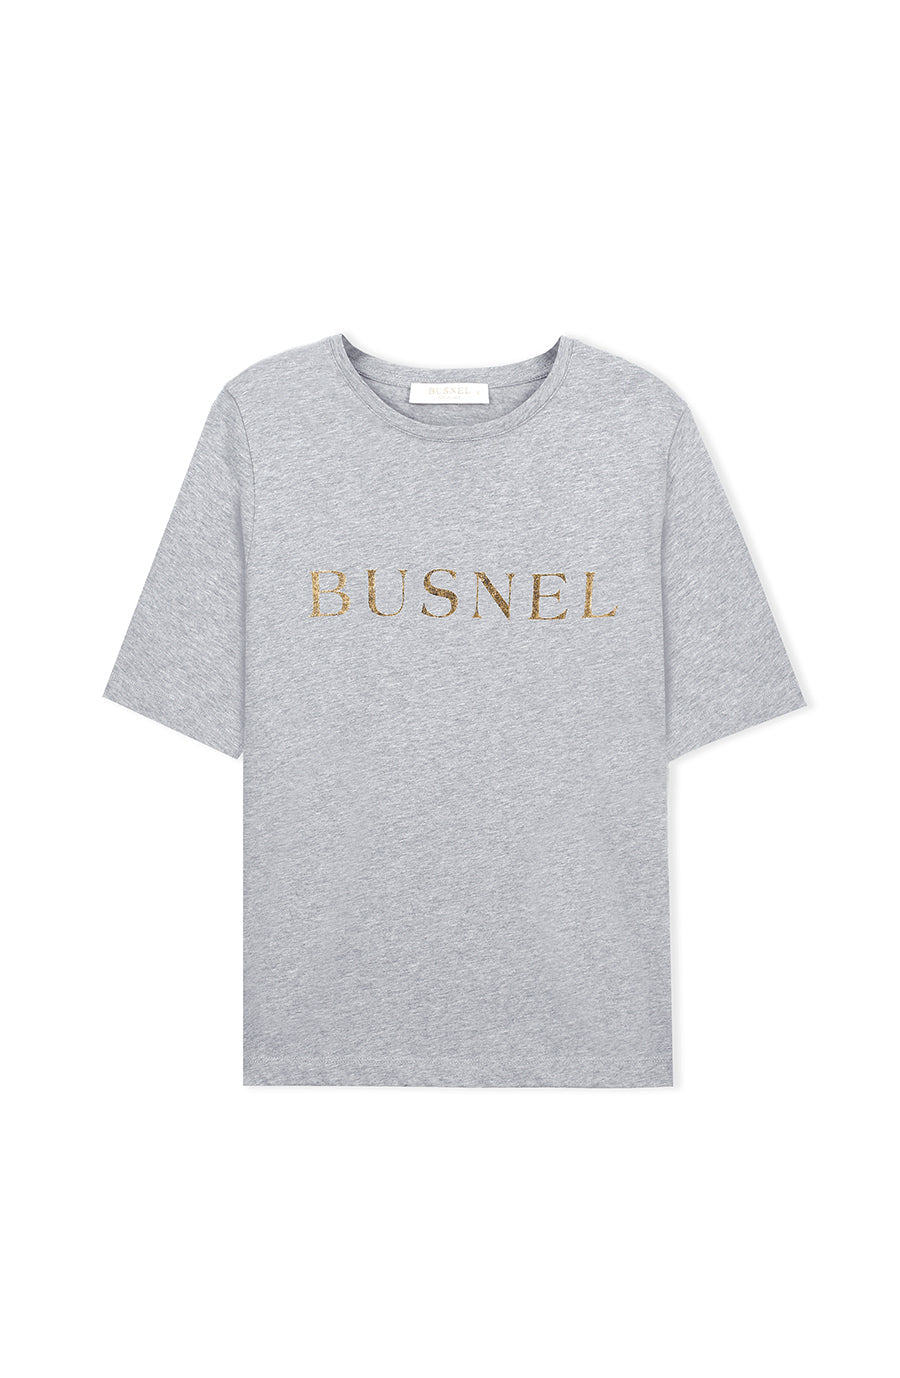 Busnel Sanna T-shirt Grey Melange